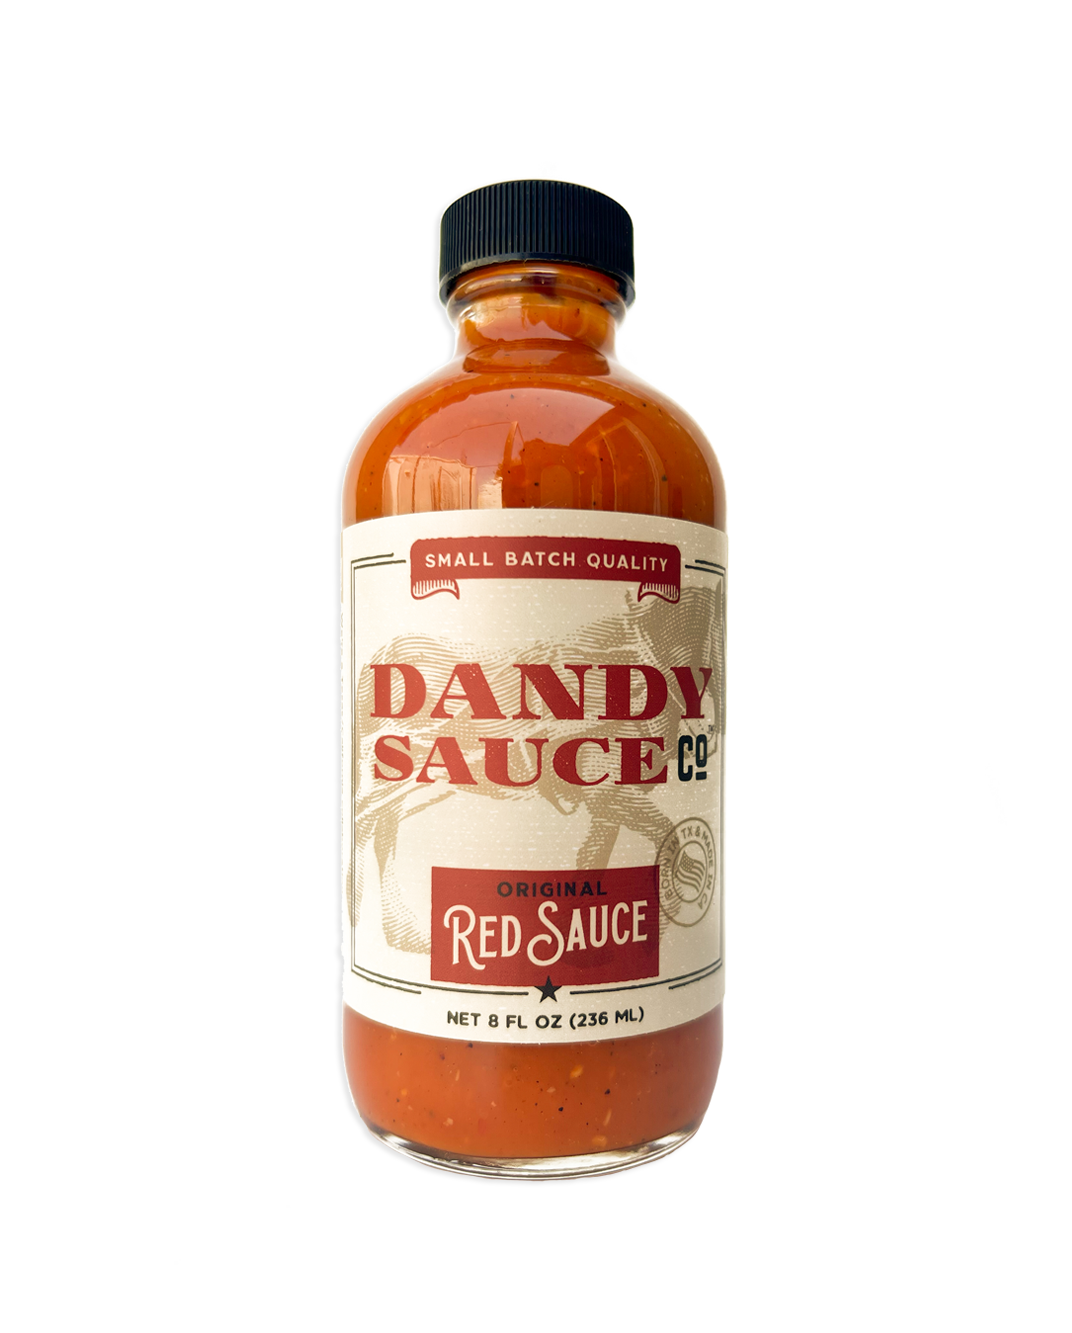 Original Red Sauce